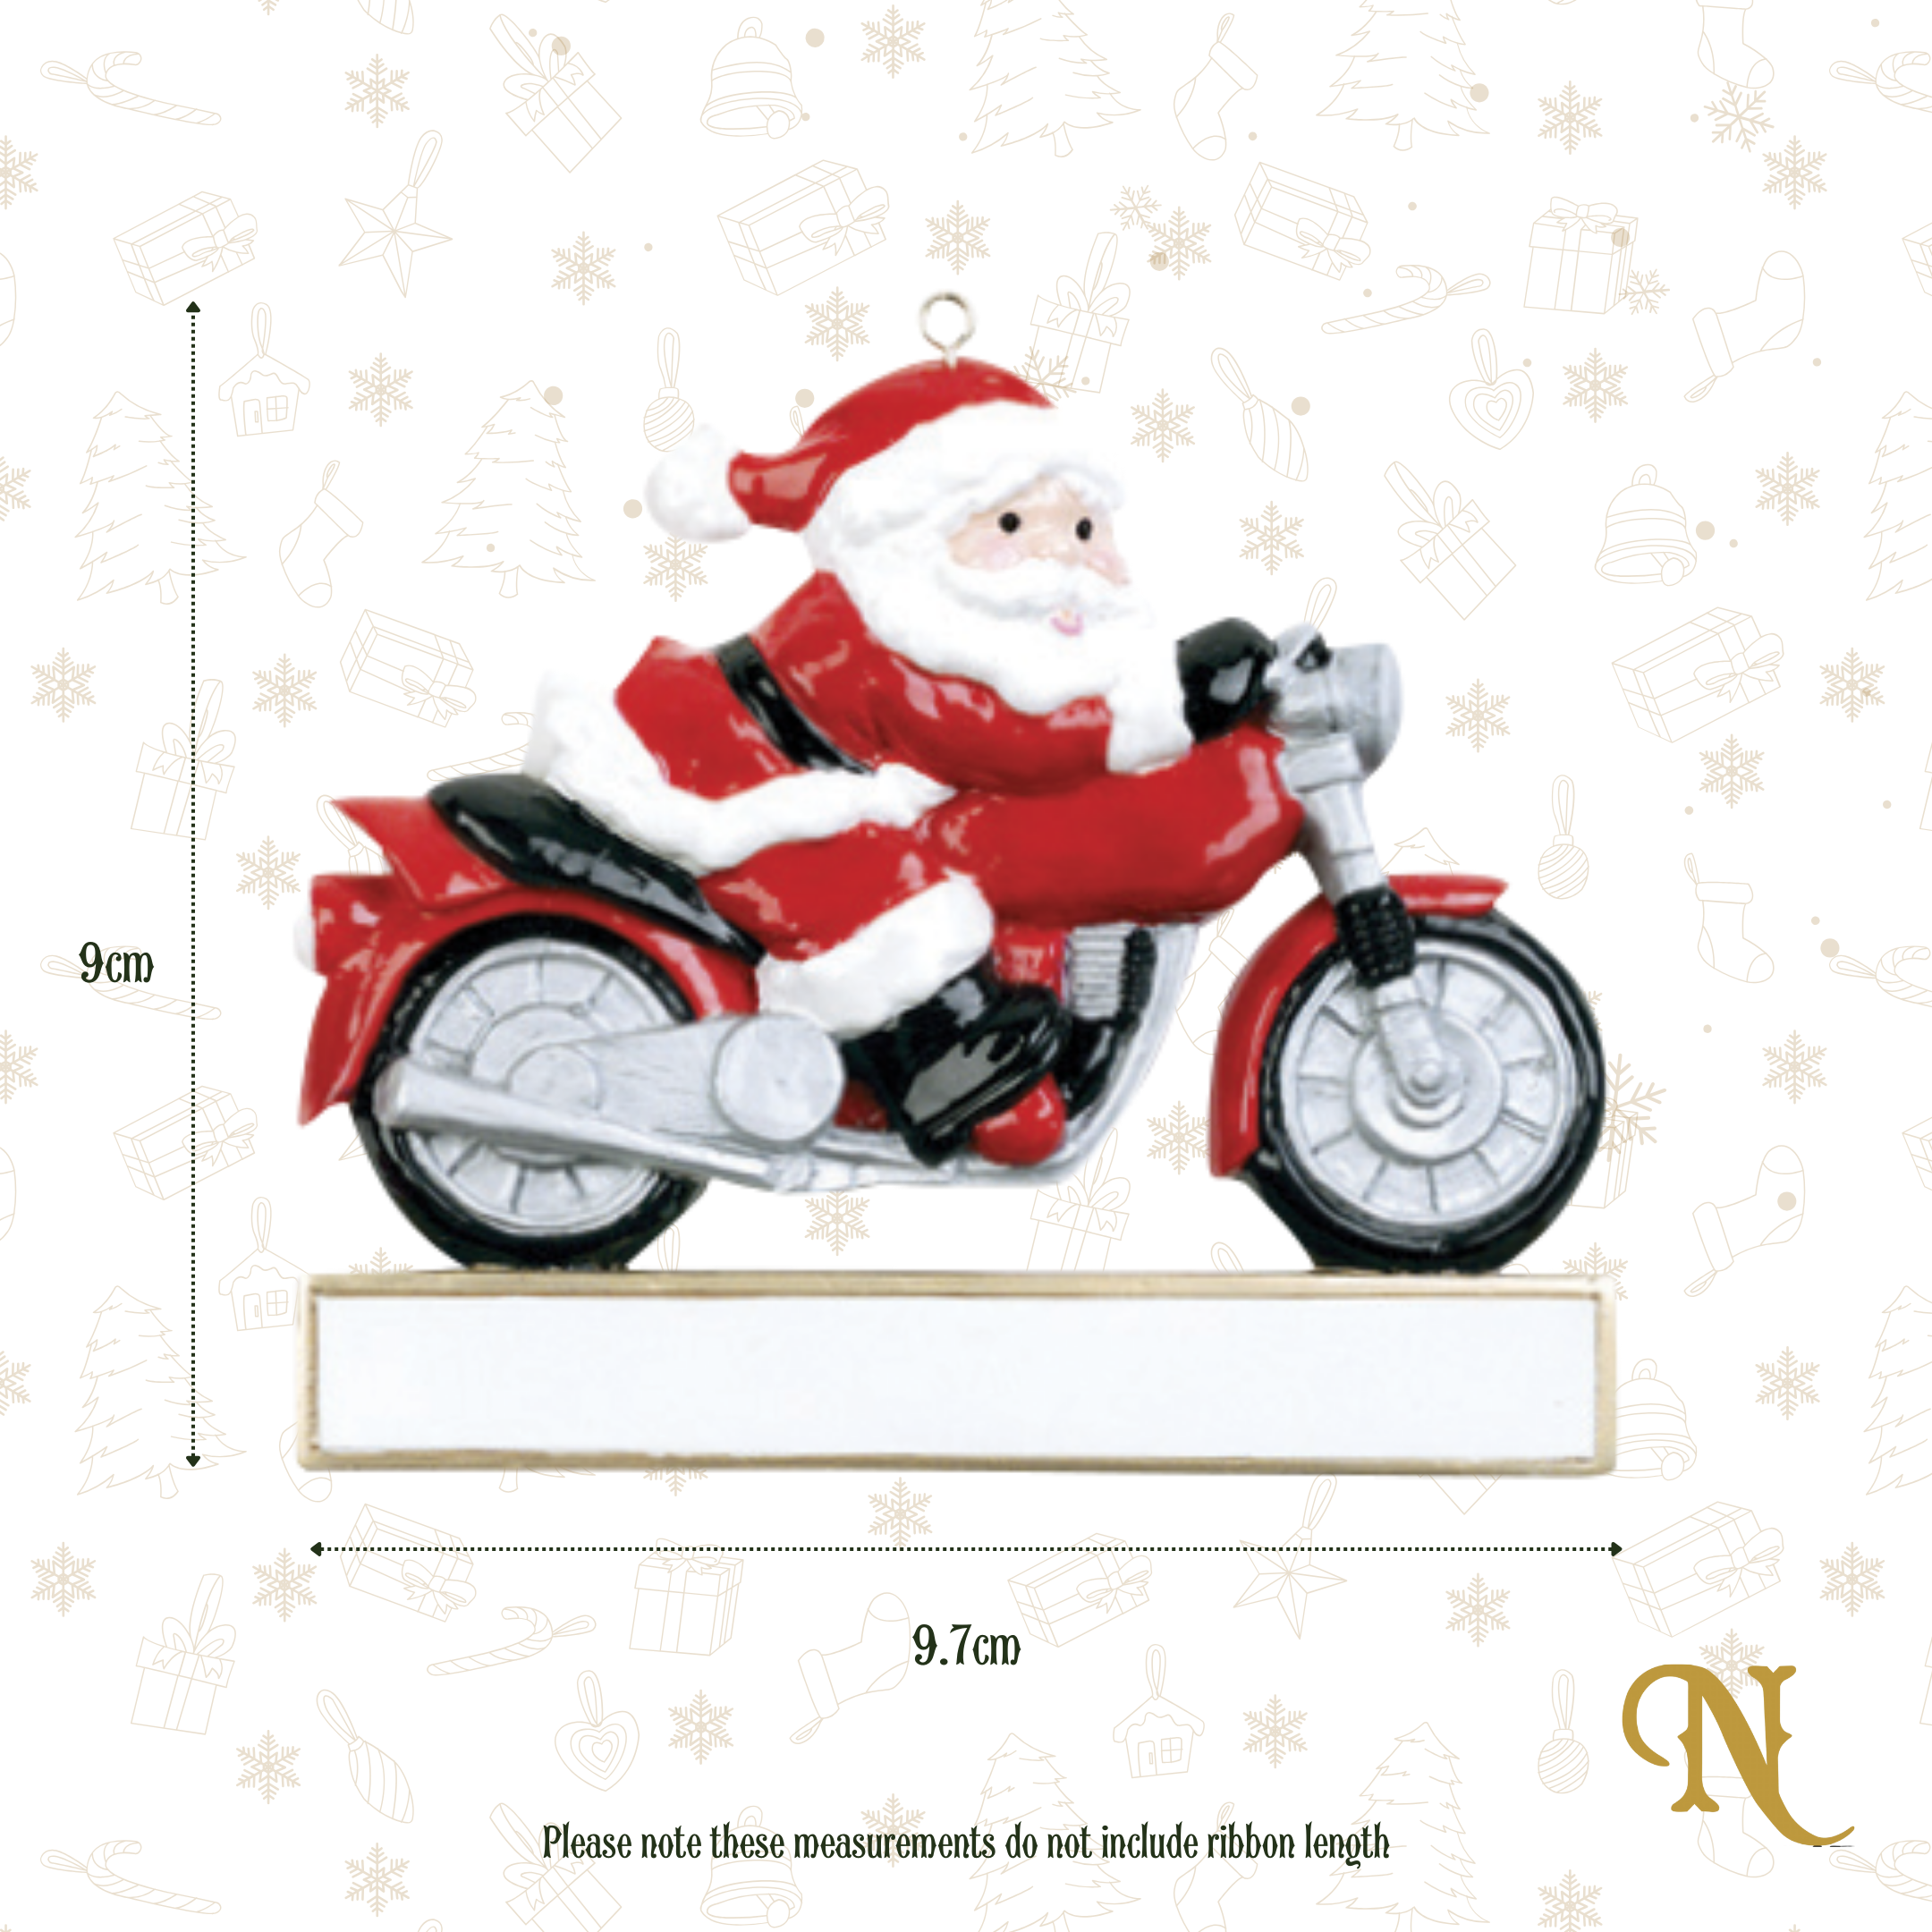 Santa on a Motorbike